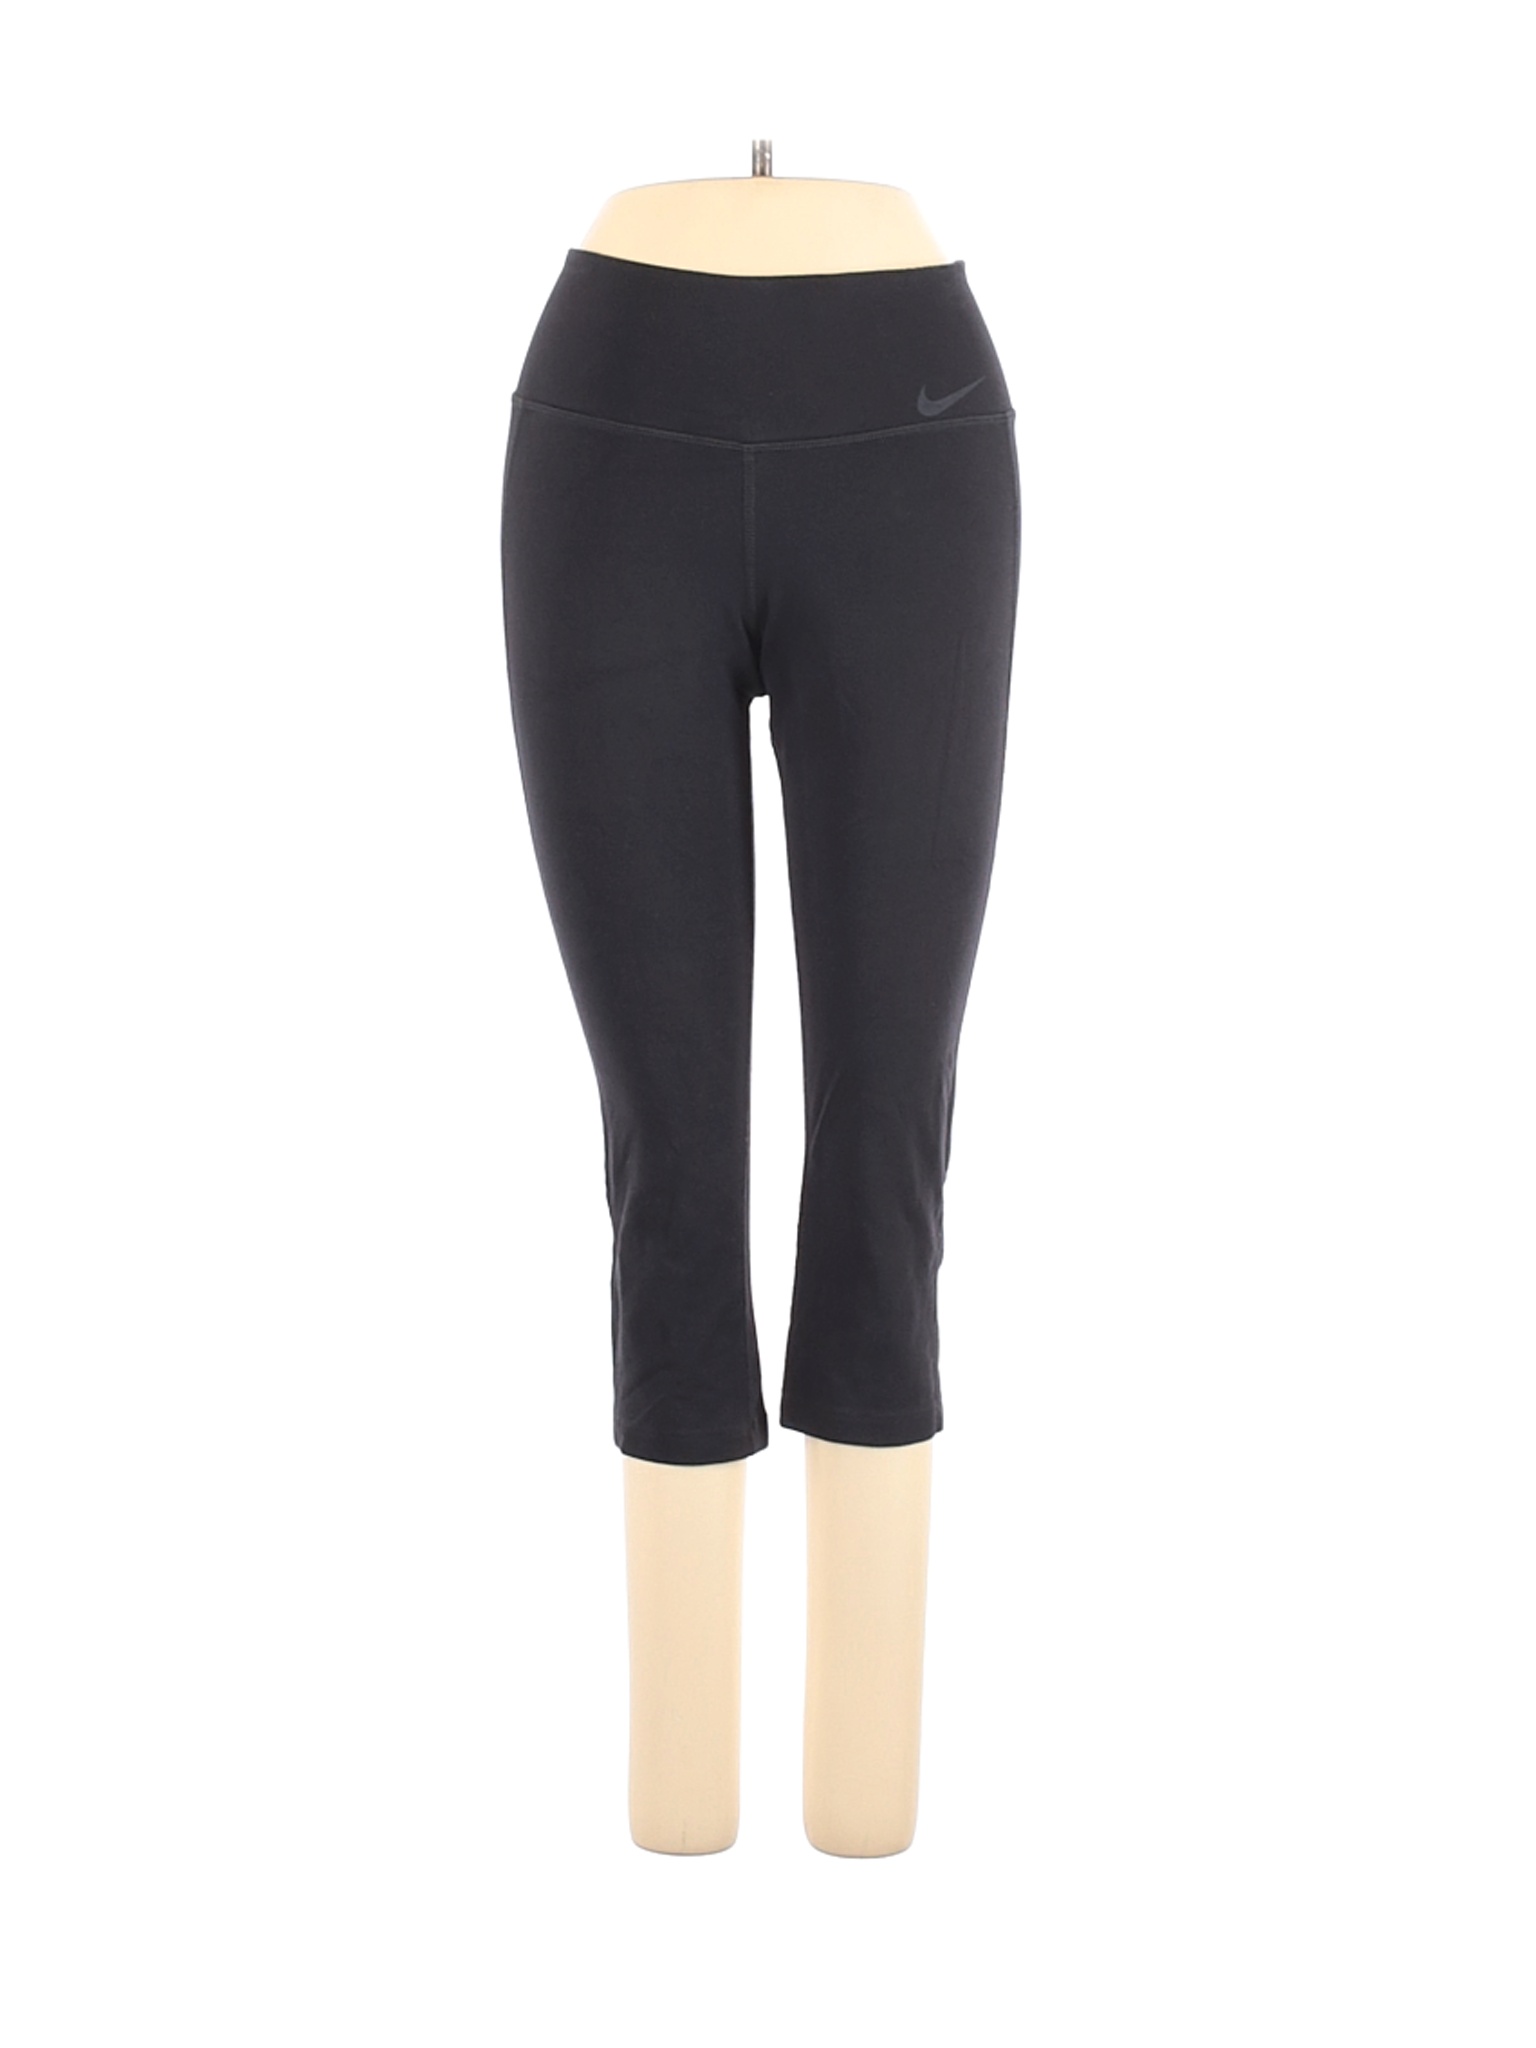 Nike Women Black Active Pants XS | eBay